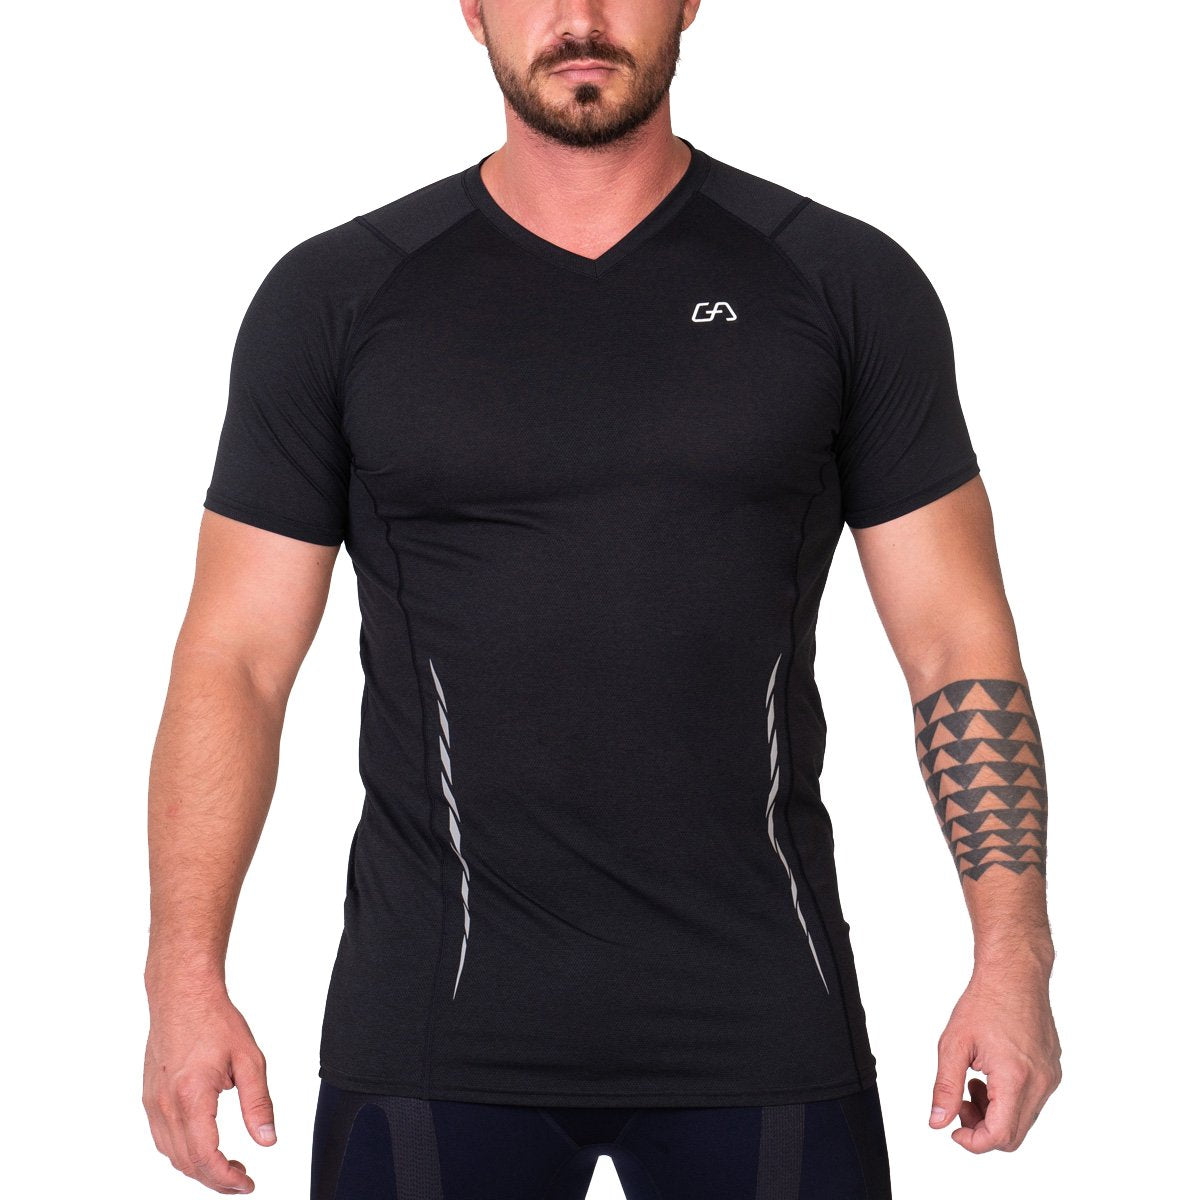 Loose-Fit T-Shirt for Men | Gym Aesthetics